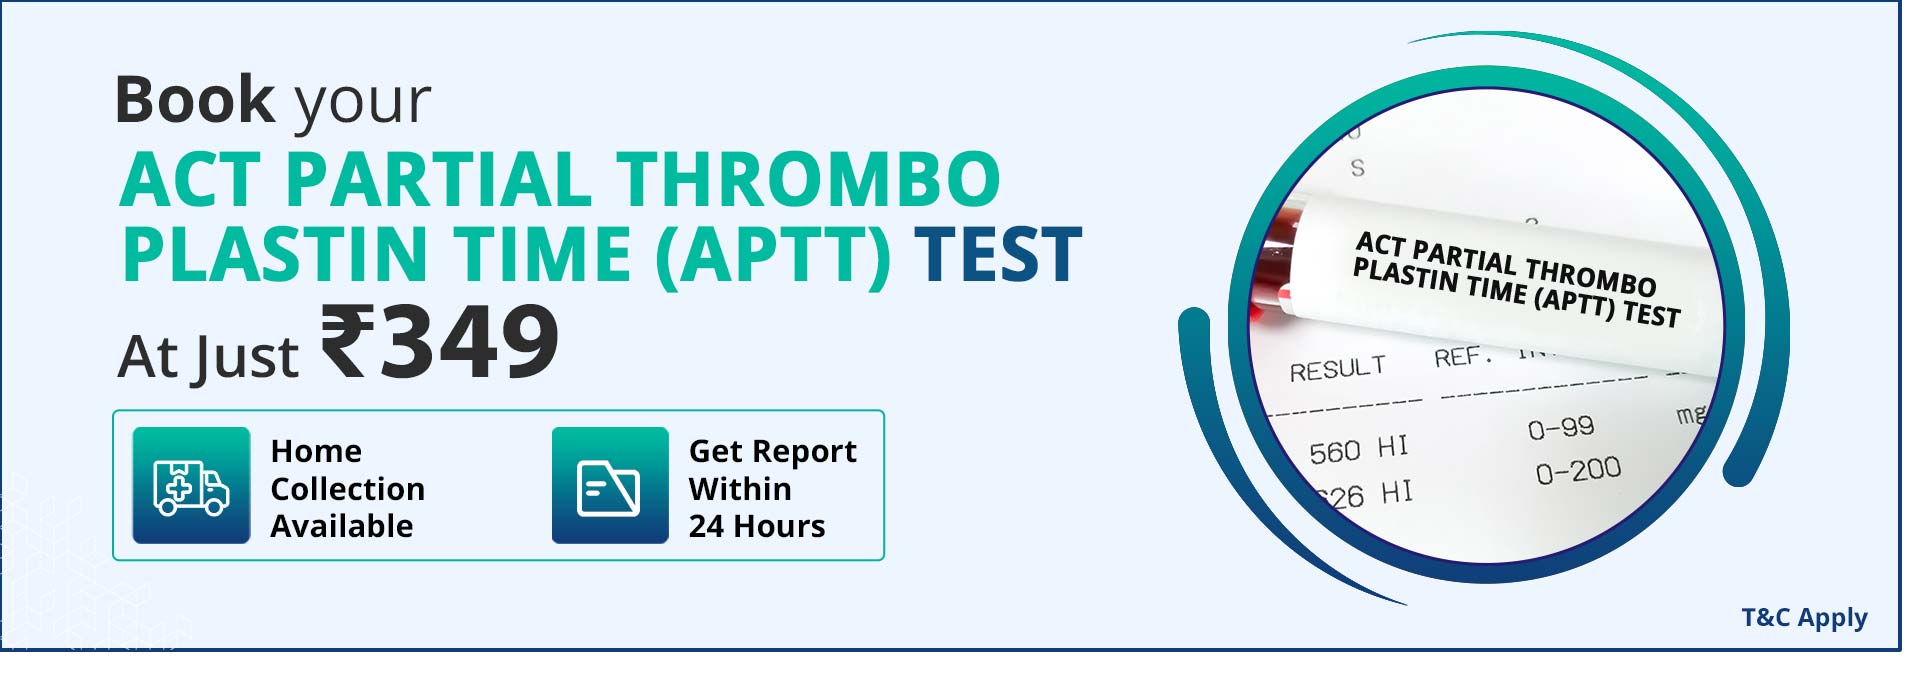 ACT Partial Thrombo Plastin Time (APTT) Test